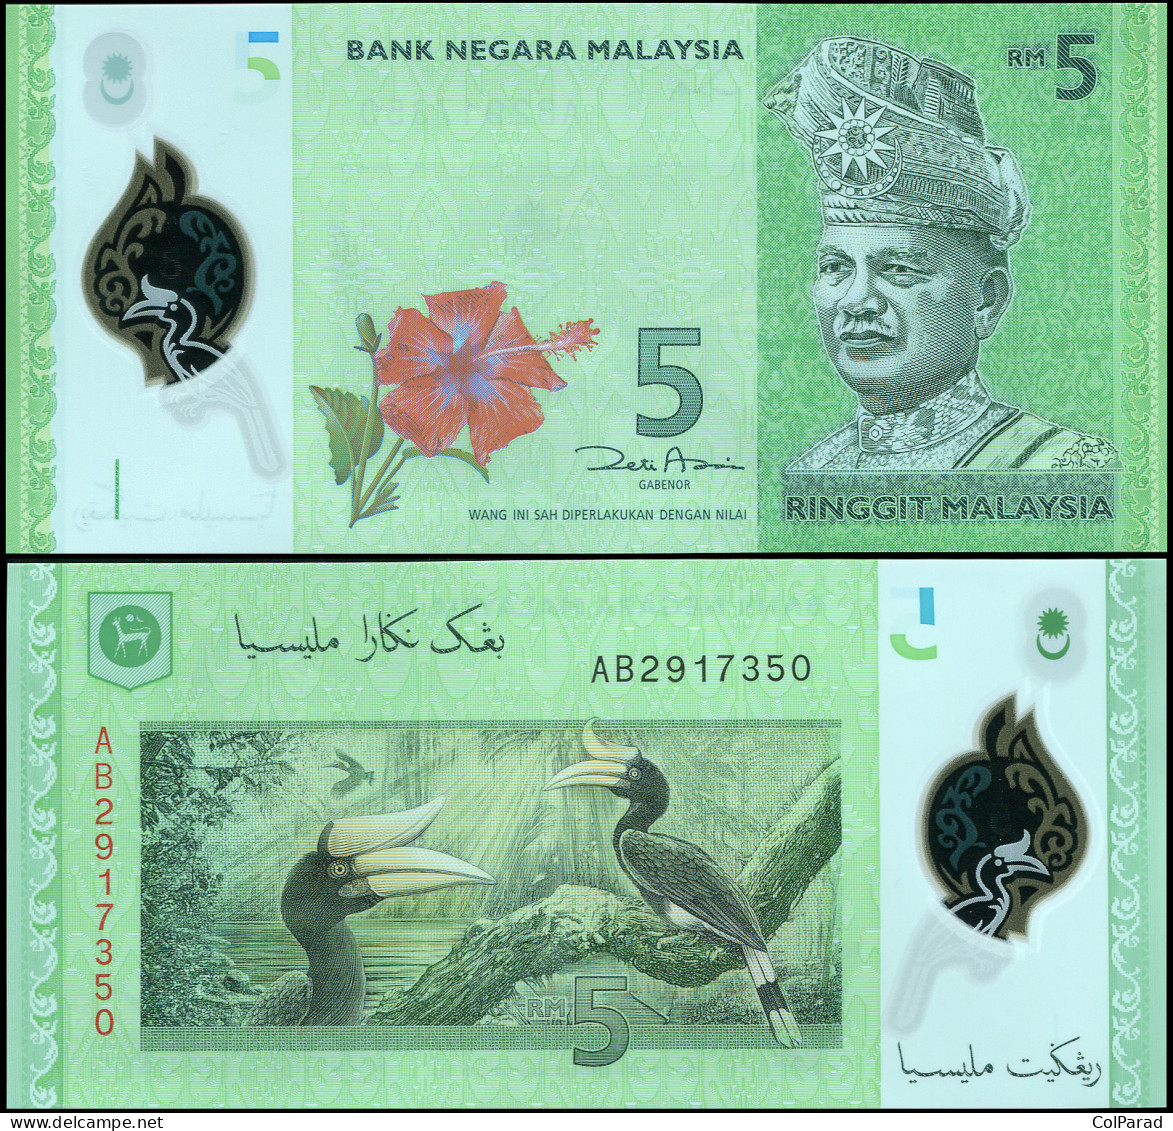 MALAYSIA 5 RINGGIT - ND (2012) - Polymer Unc - P.52a Banknote - Malasia